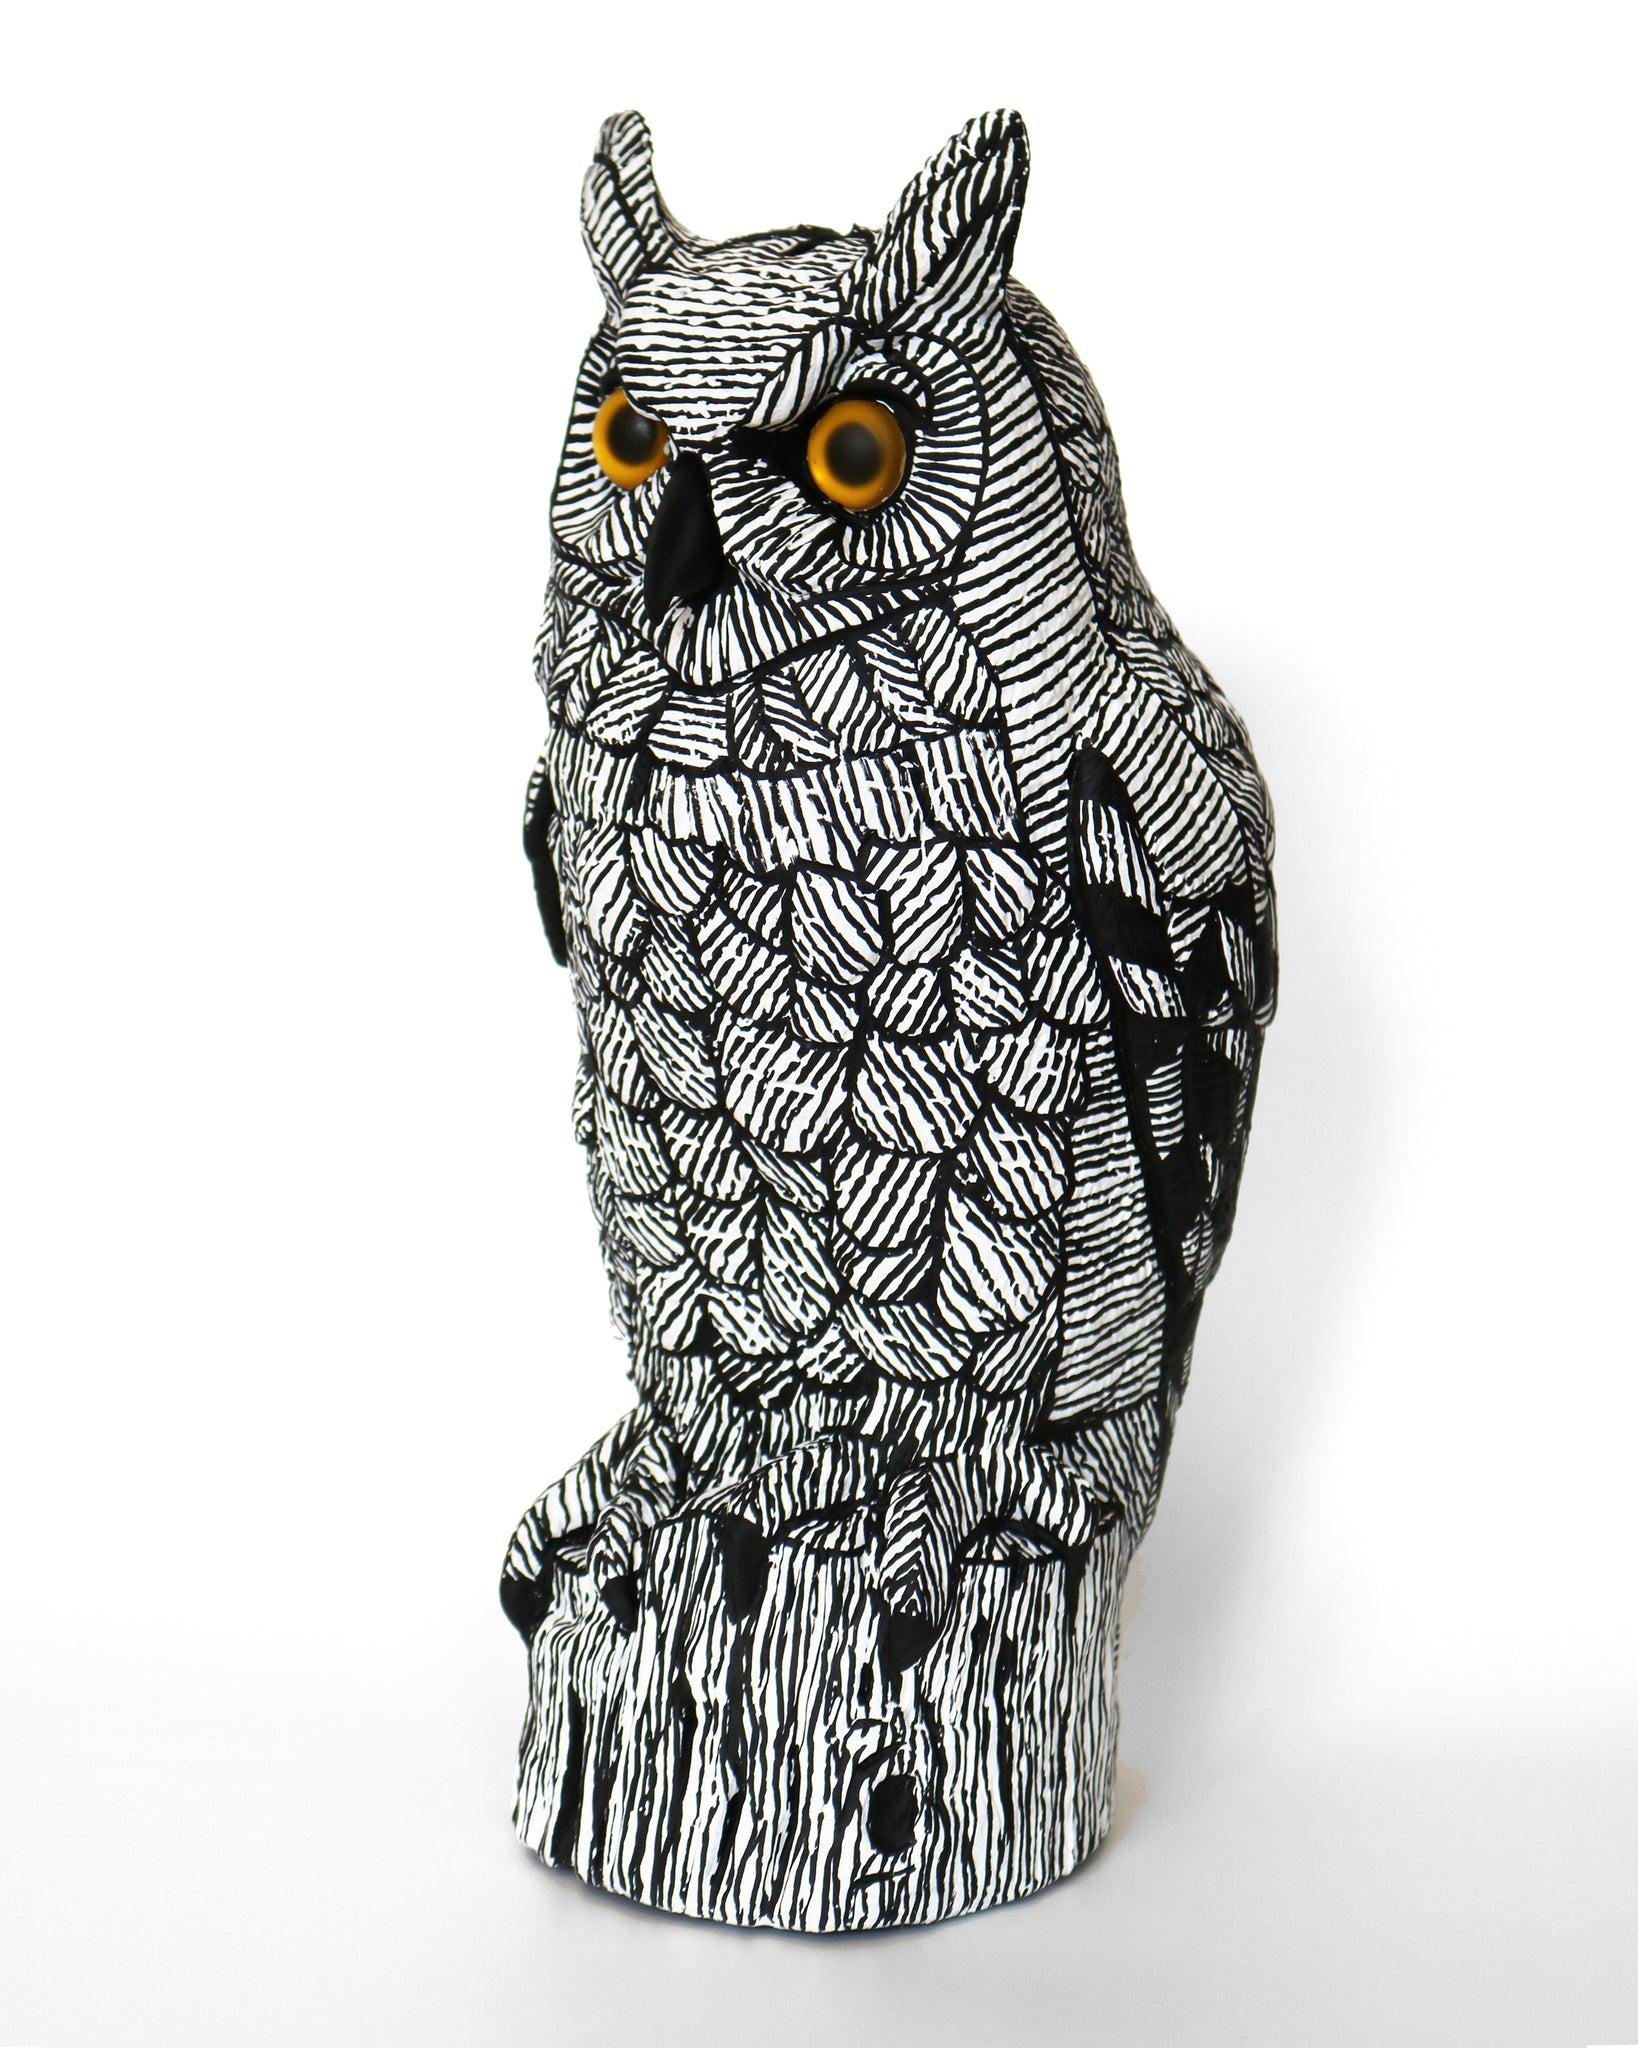 Anne Muntges, "Owl"